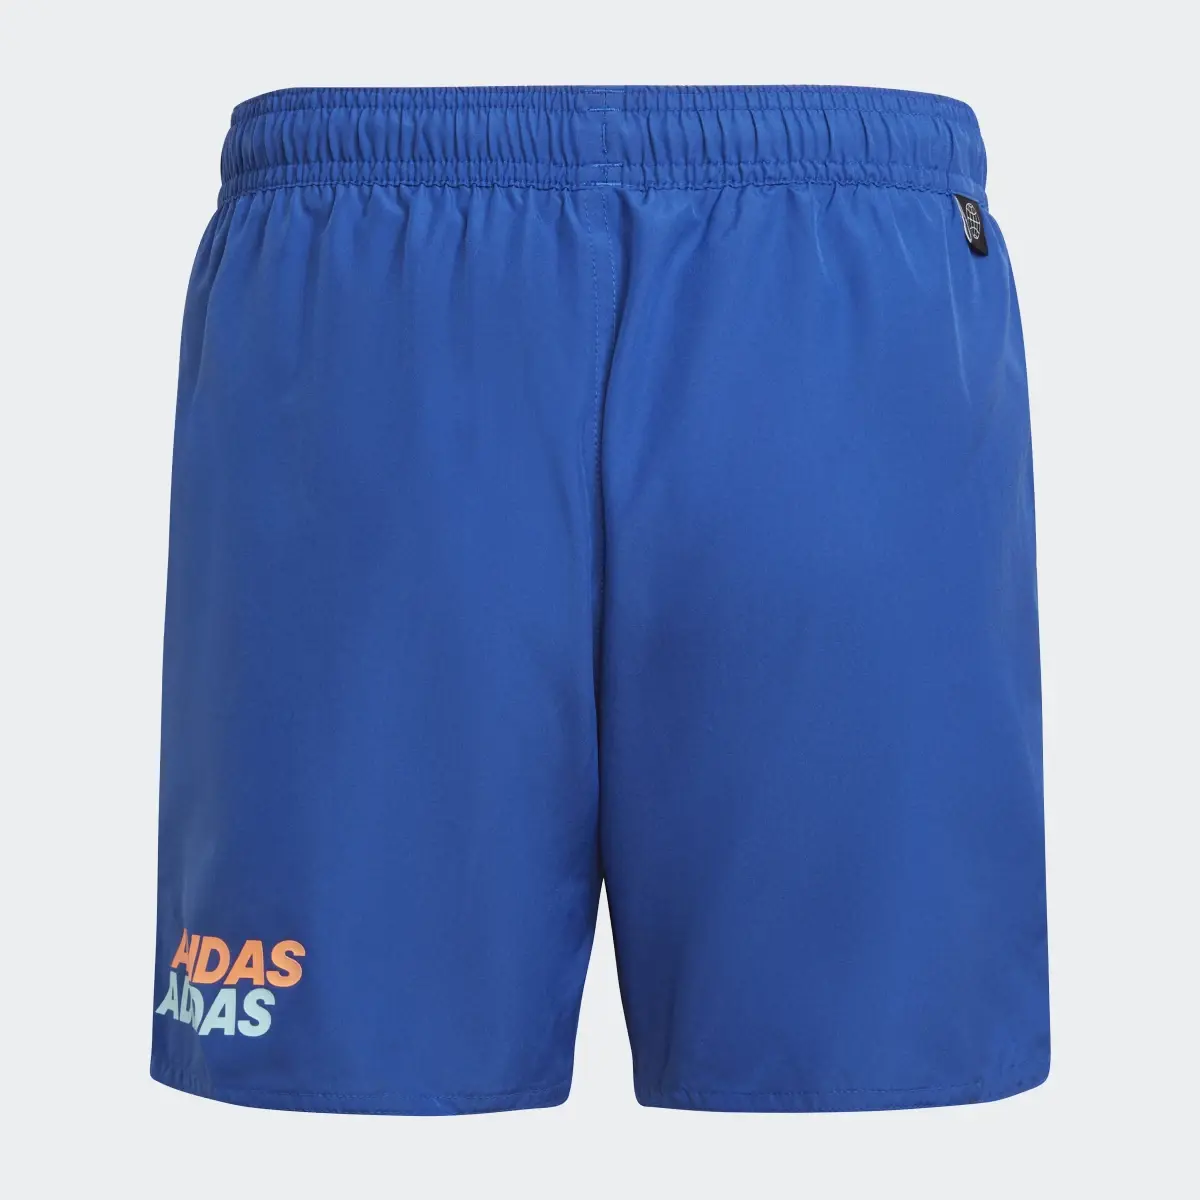 Adidas Lineage Swim Shorts. 2